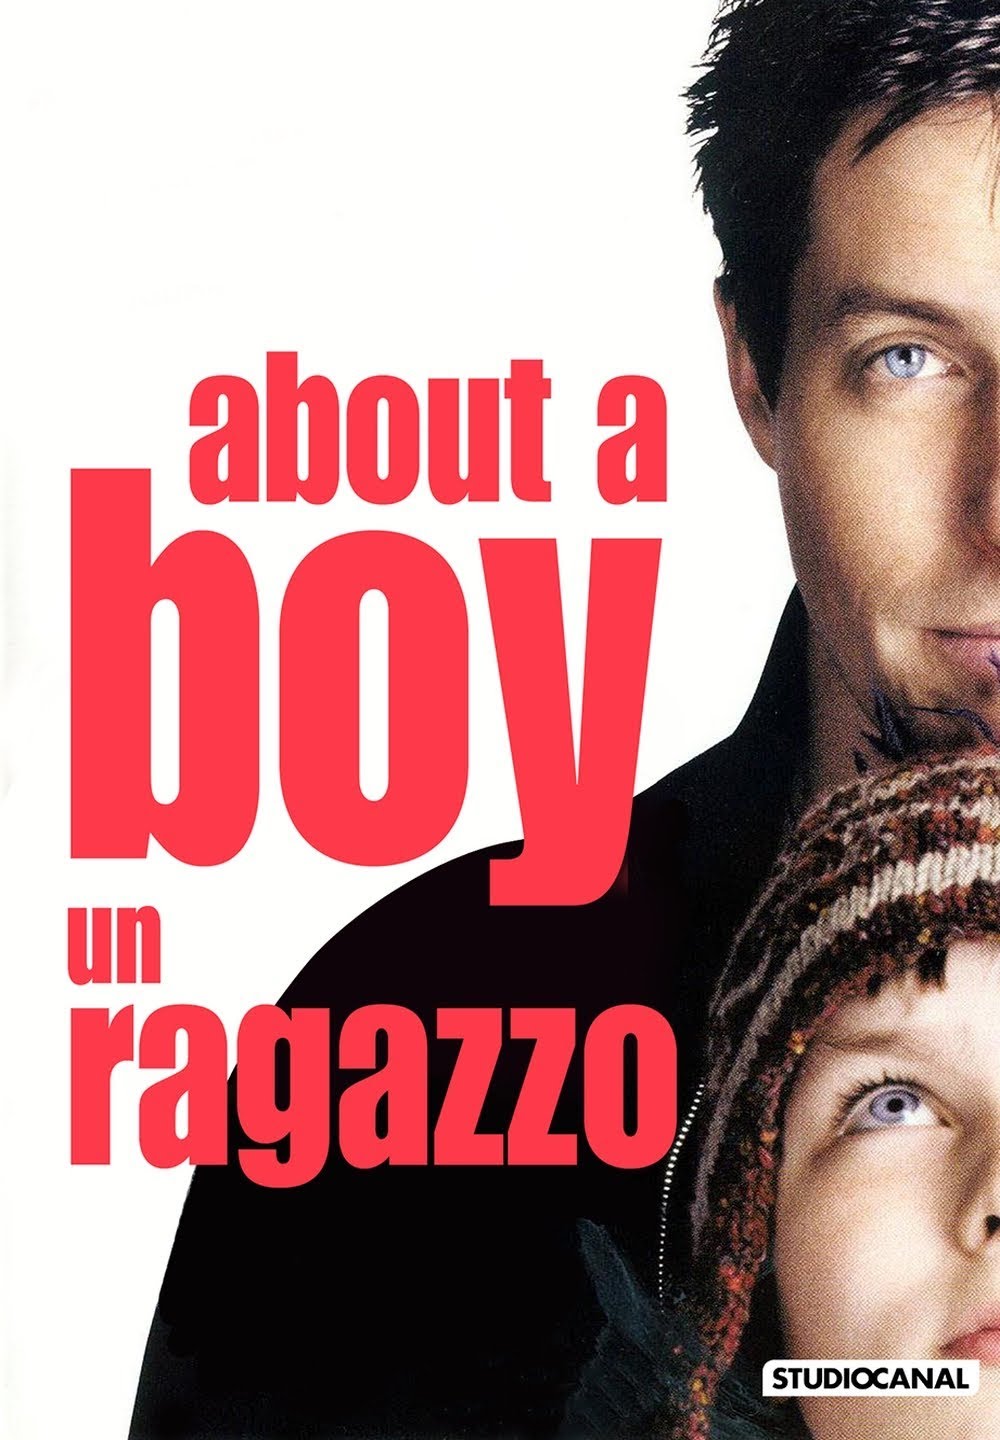 About a Boy – Un ragazzo [HD] (2002)